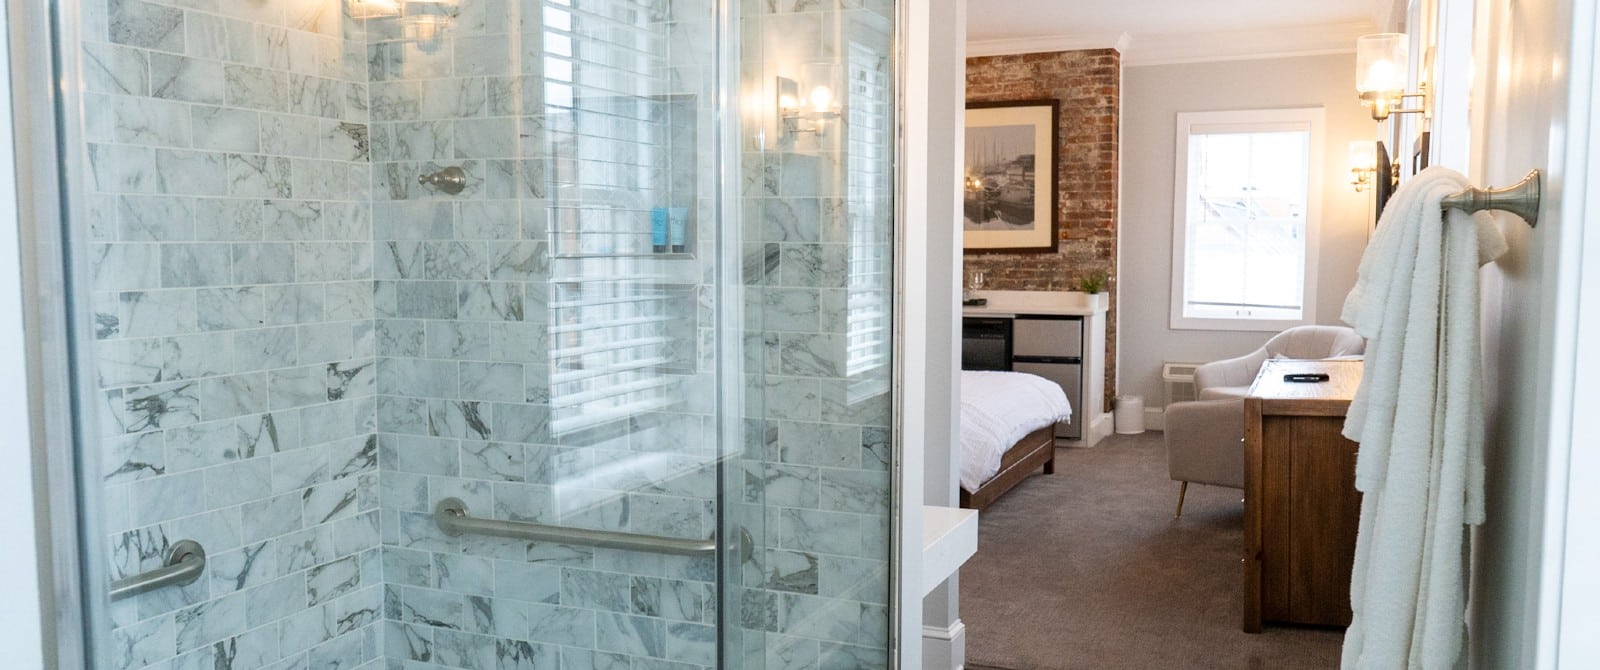 Open bathroom with tiled shower and glass doors overlooking spacious bedroom